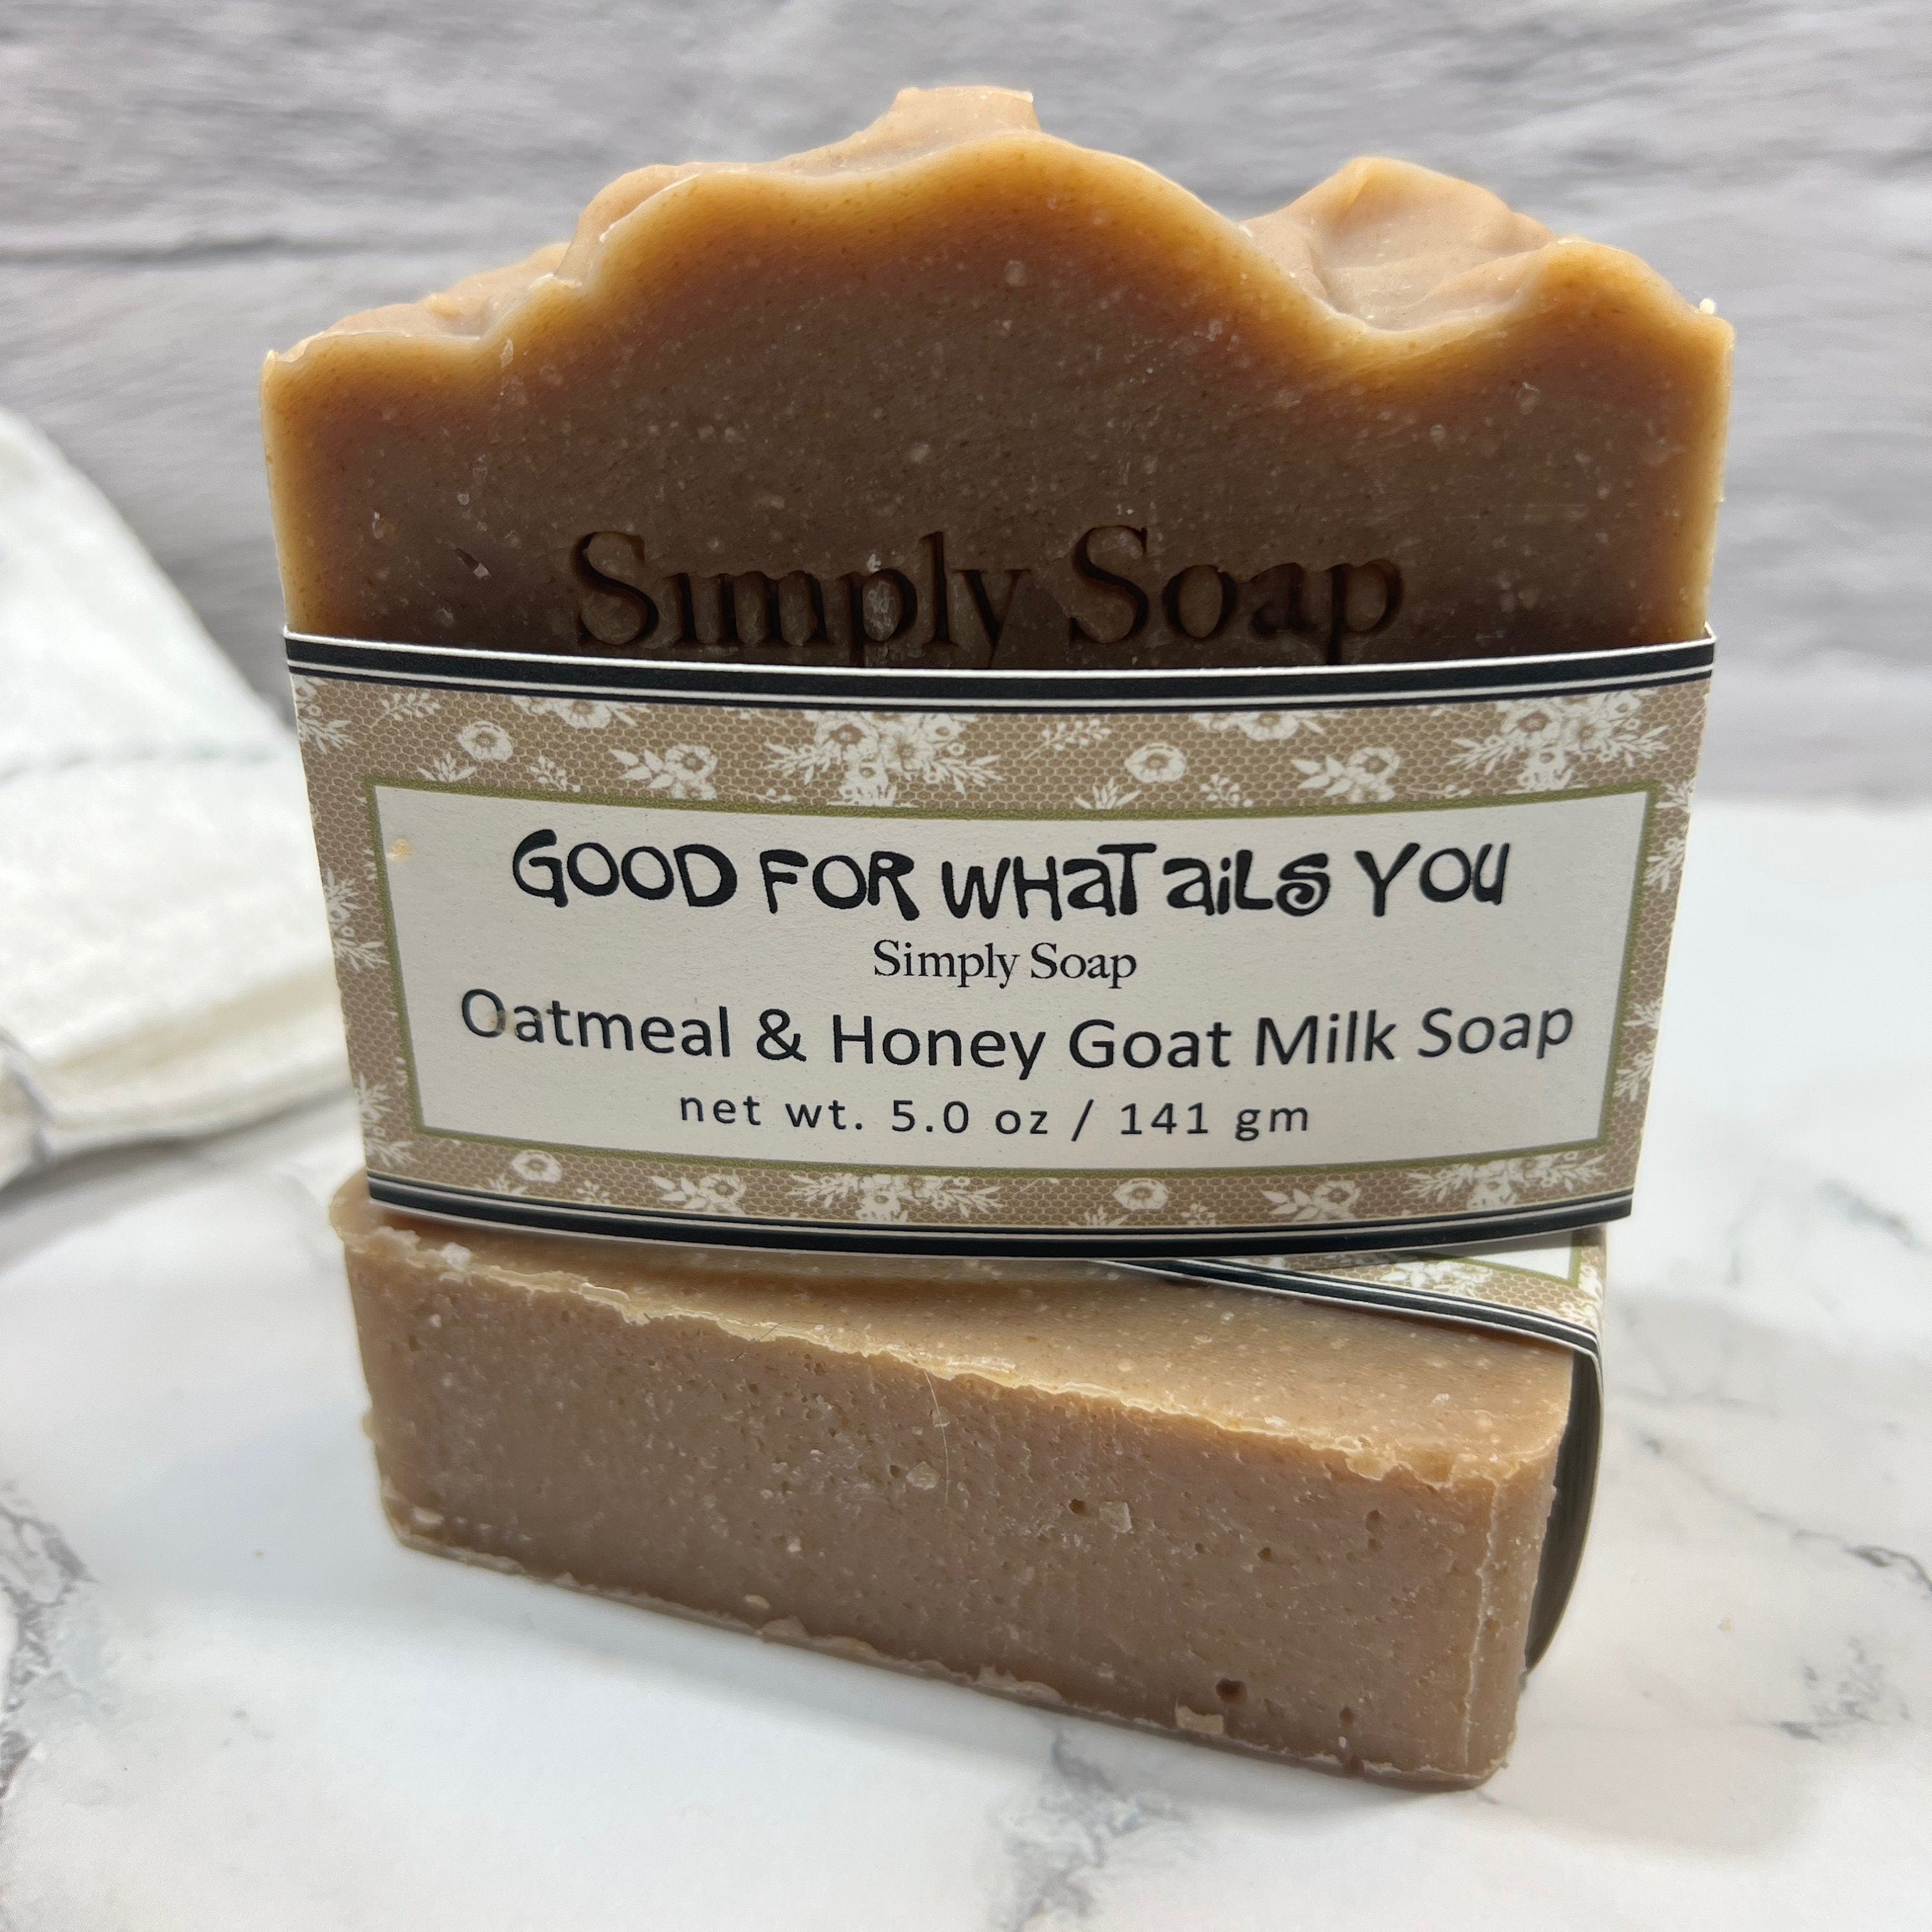 Goat Milk Soap Recipe with Honey, Lavender & Oats